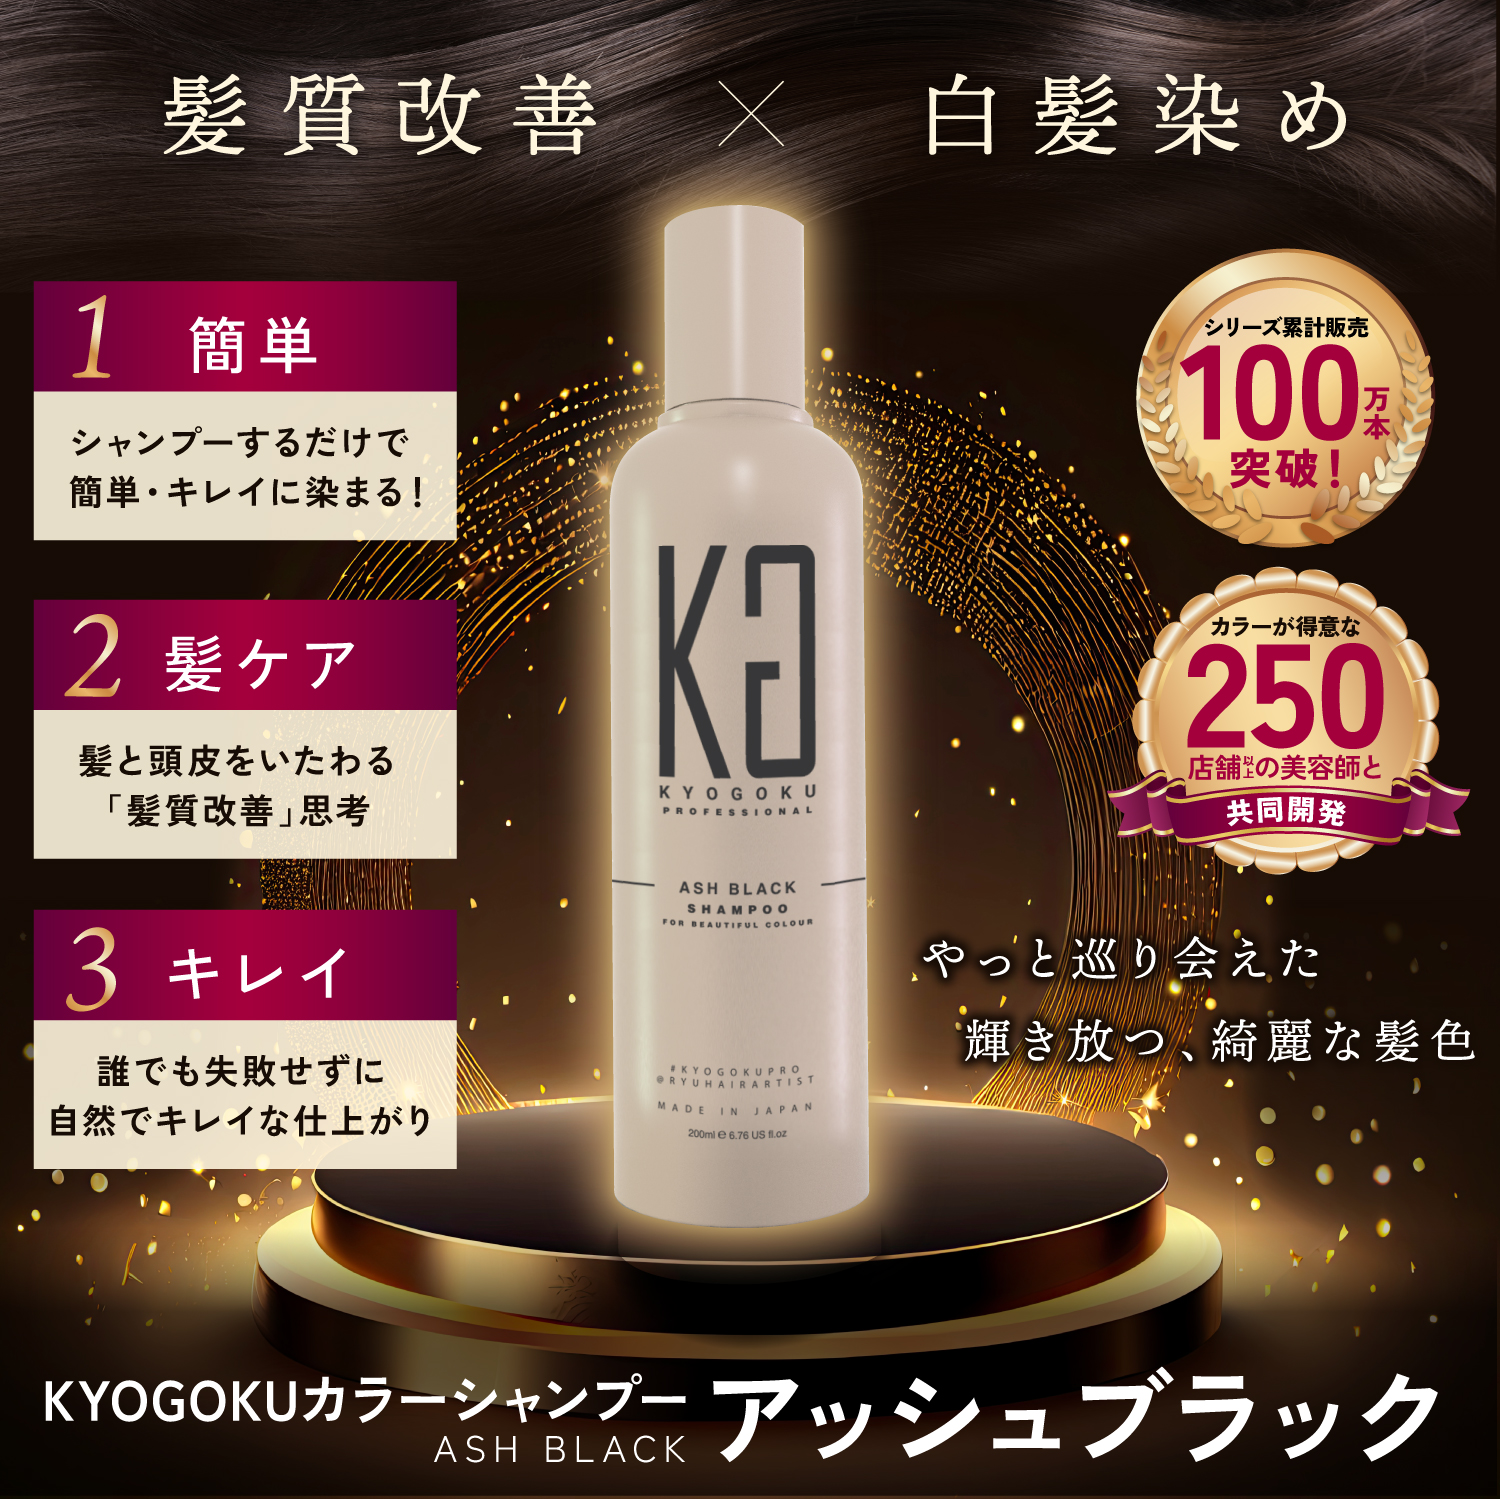 KYOGOKU カラーシャンプー ナチュラルブラウン 200ml カラー